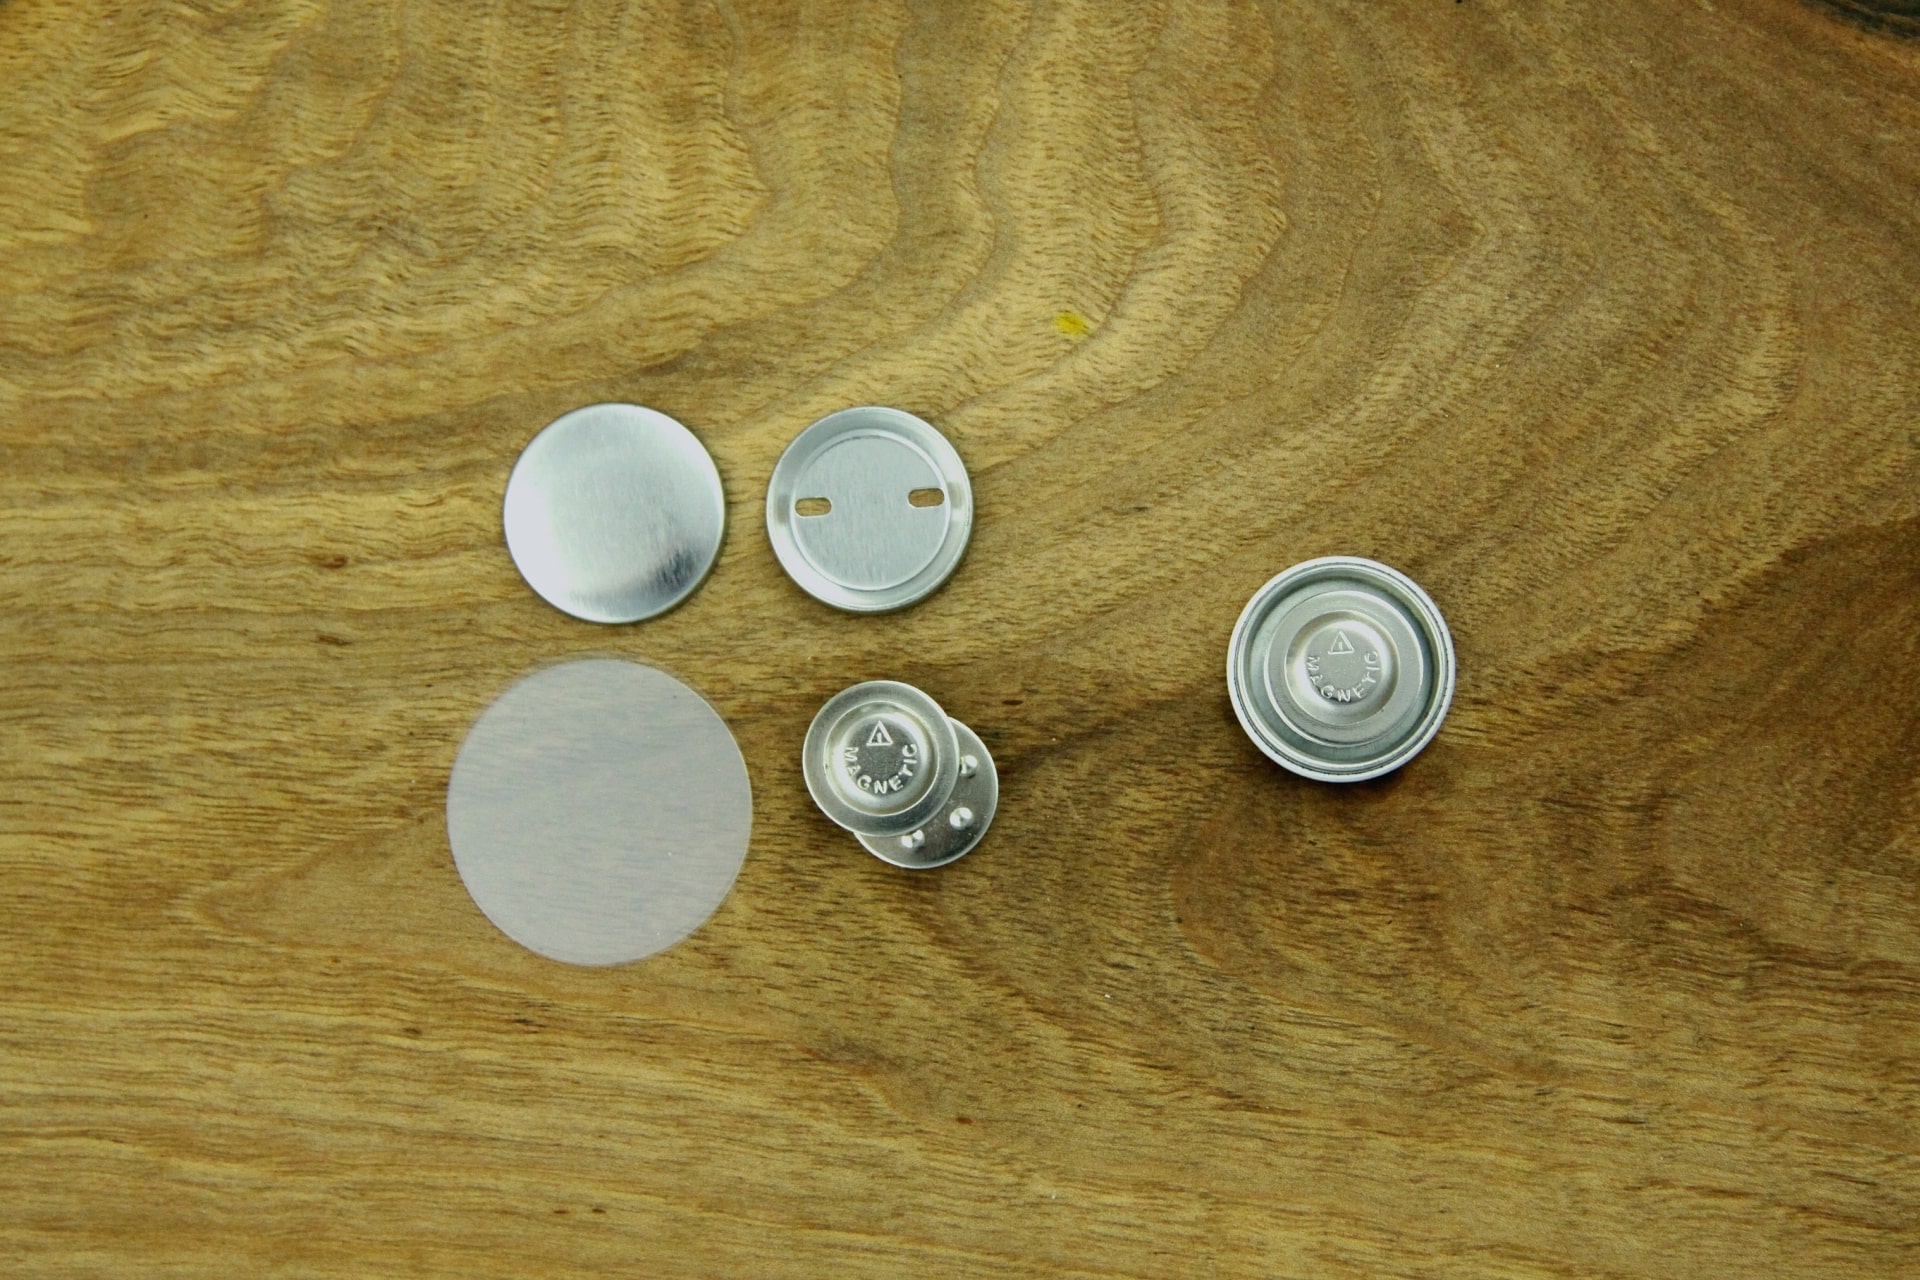 komponenty do przypinek z magnesem do ubrania 25mm